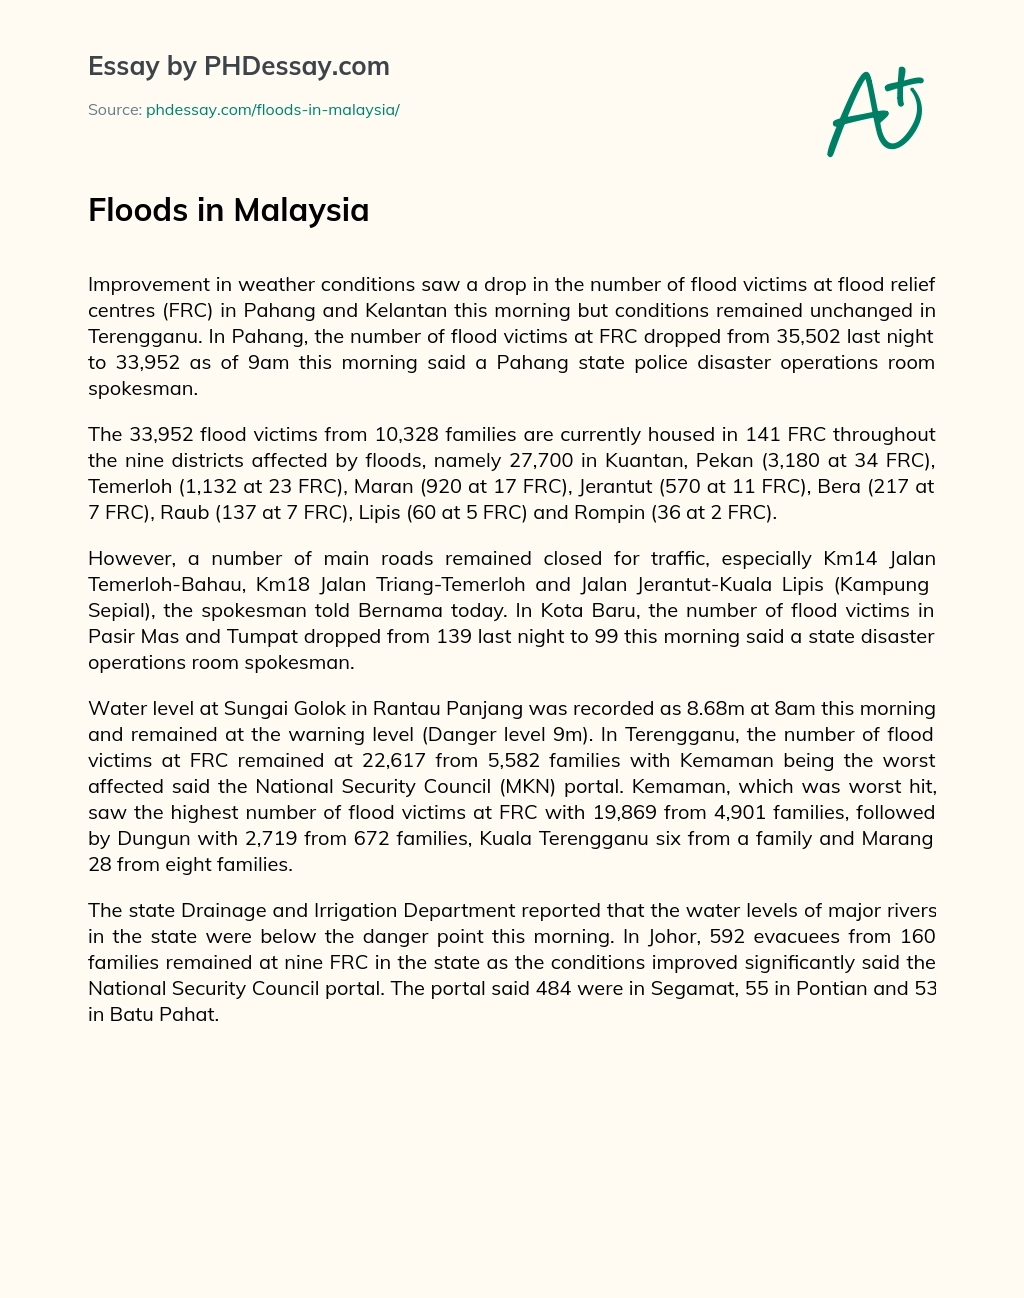 Floods in Malaysia essay